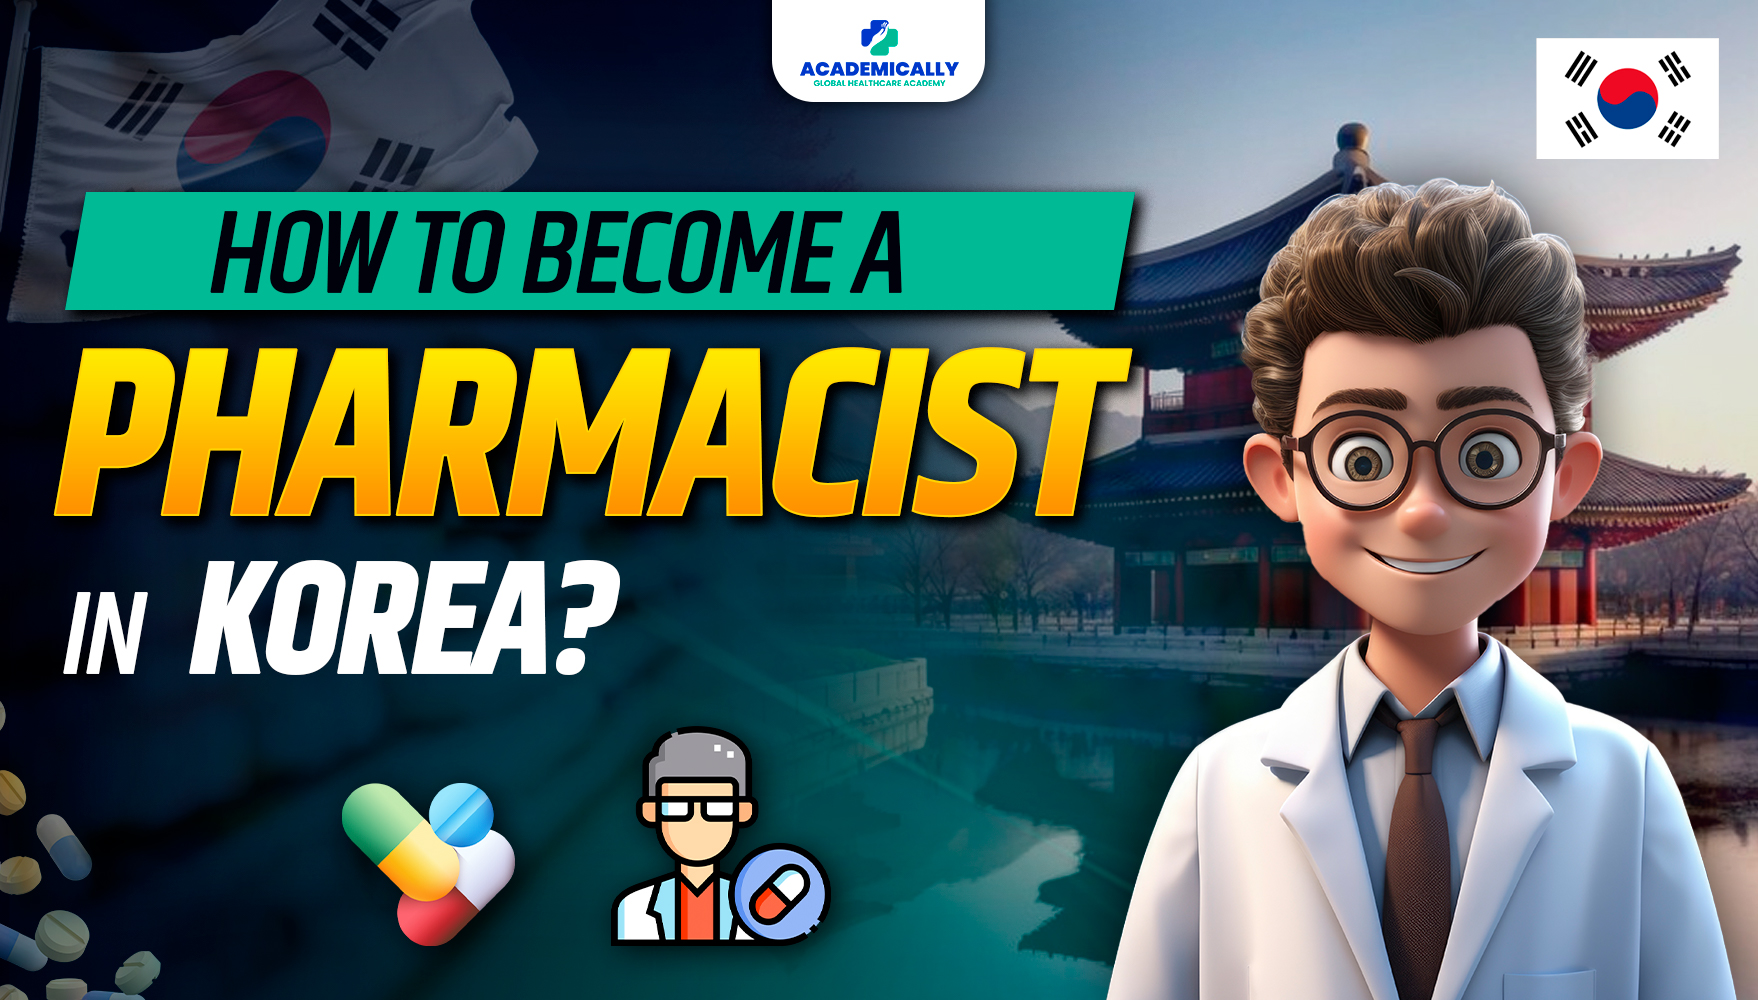 Becoming Pharmacist in Korea